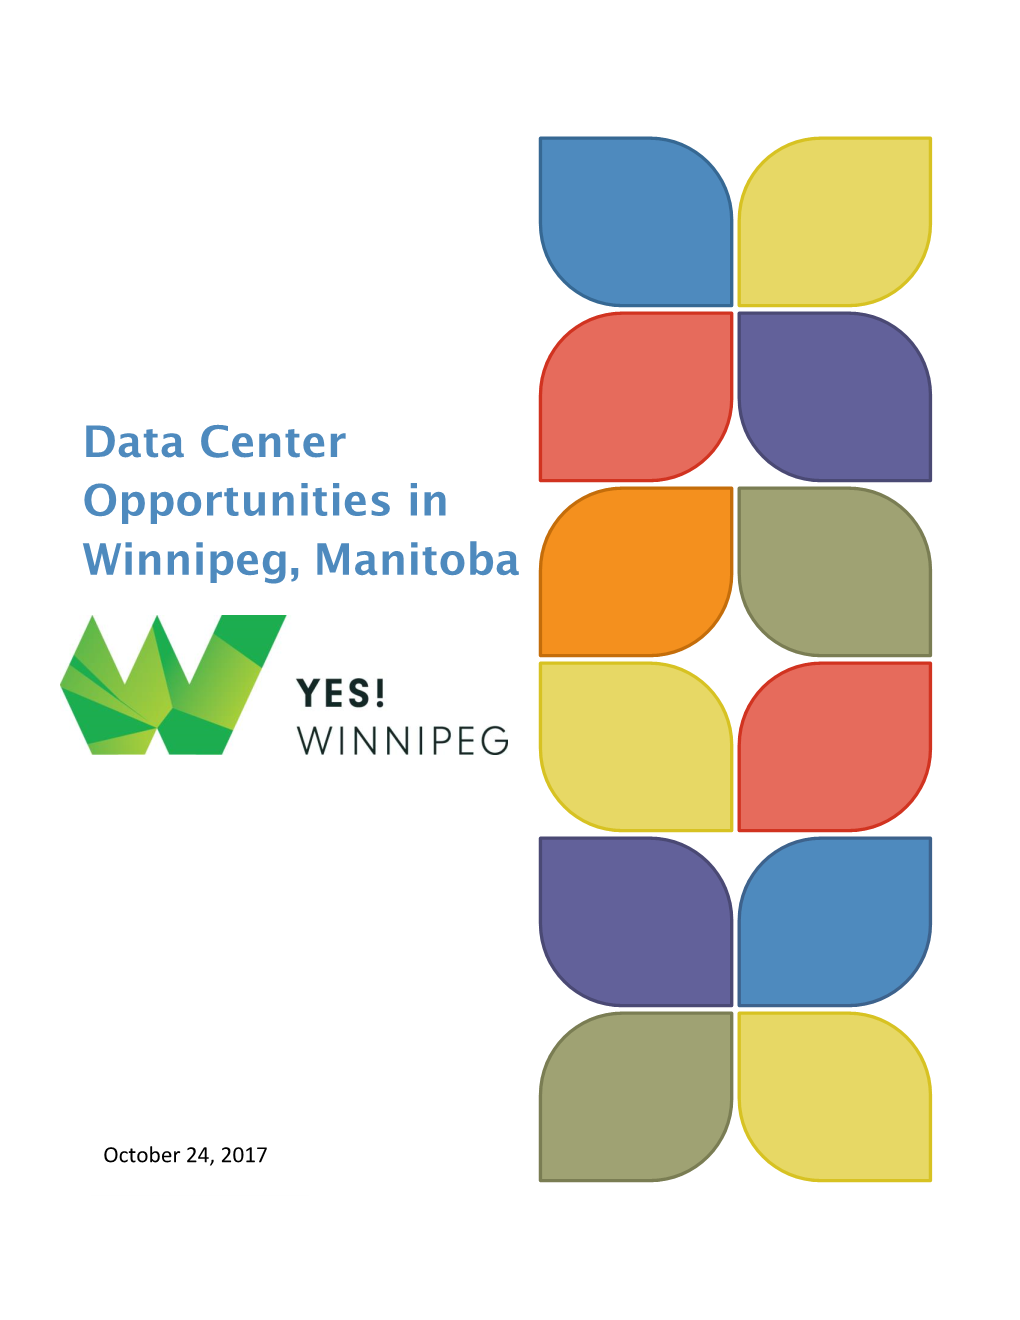 Data Center Opportunities in Winnipeg, Manitoba